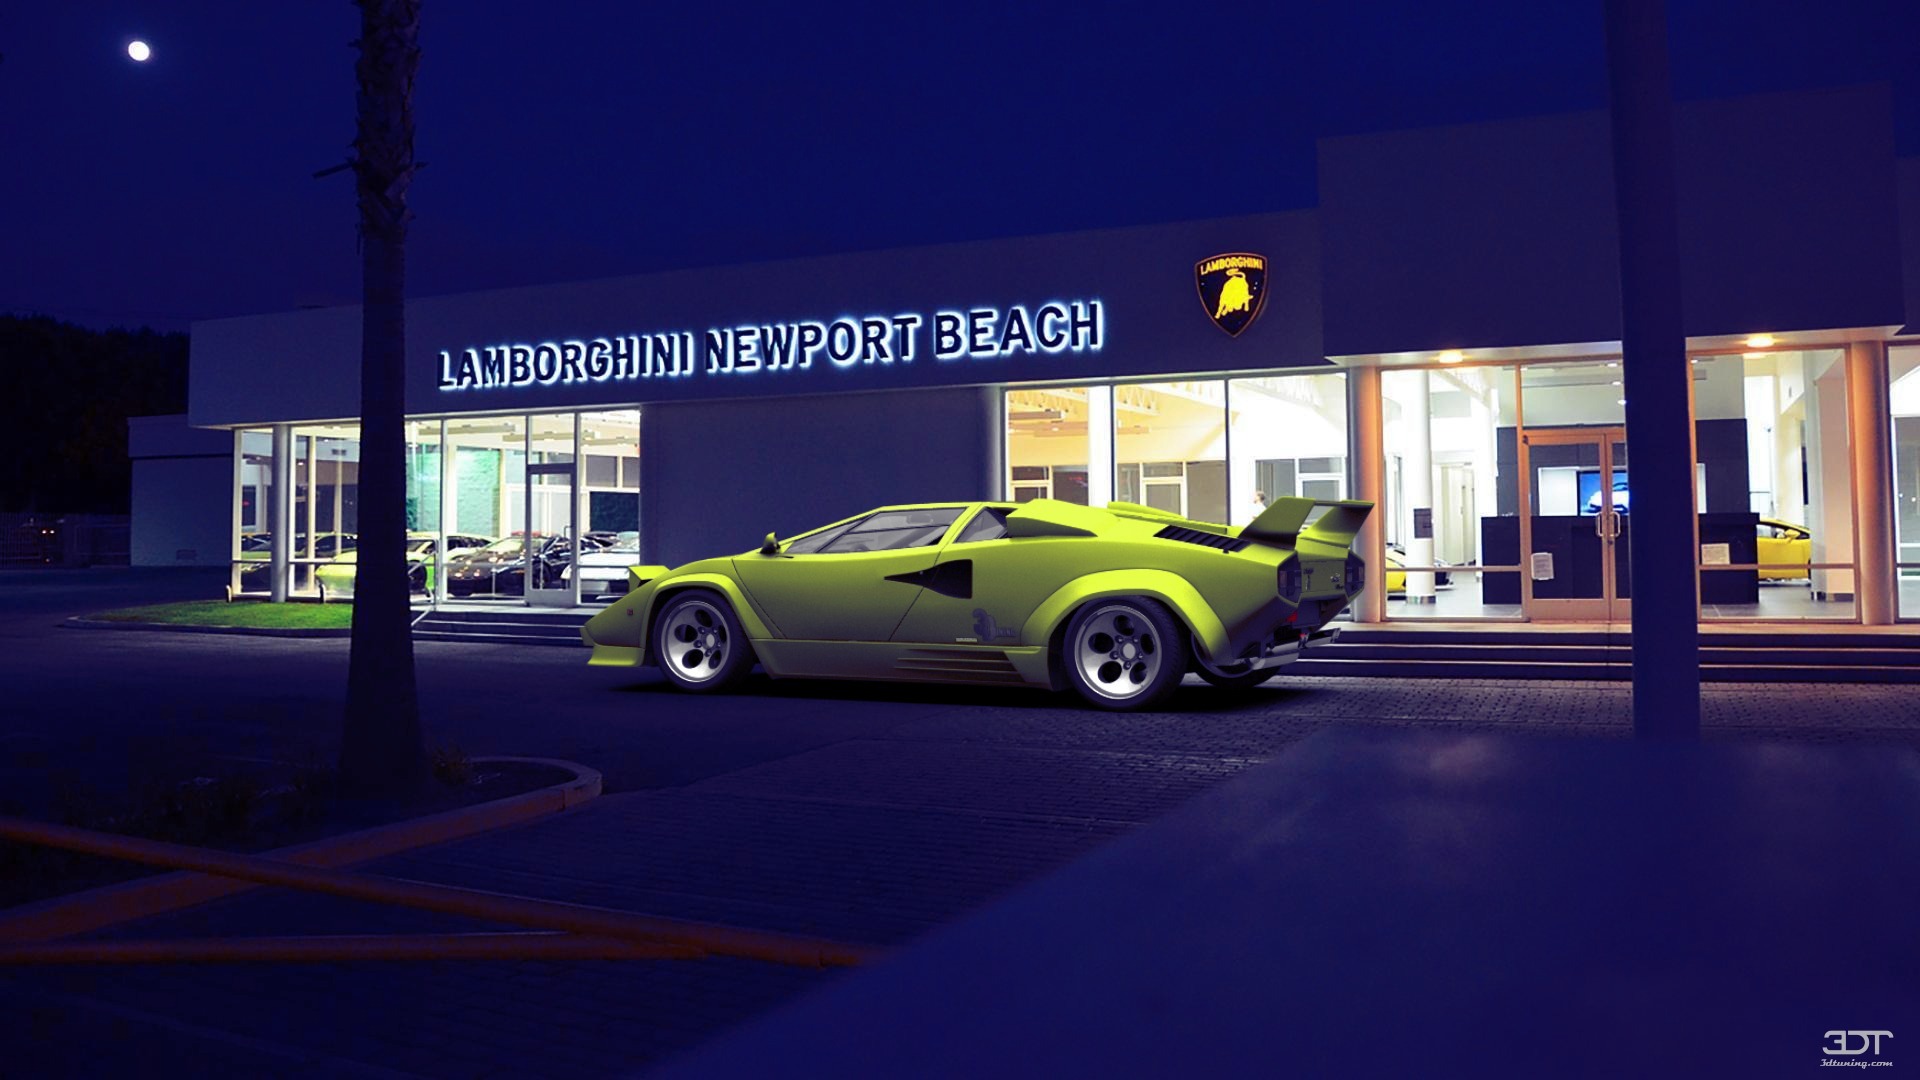 Lamborghini Countach Coupe 1982